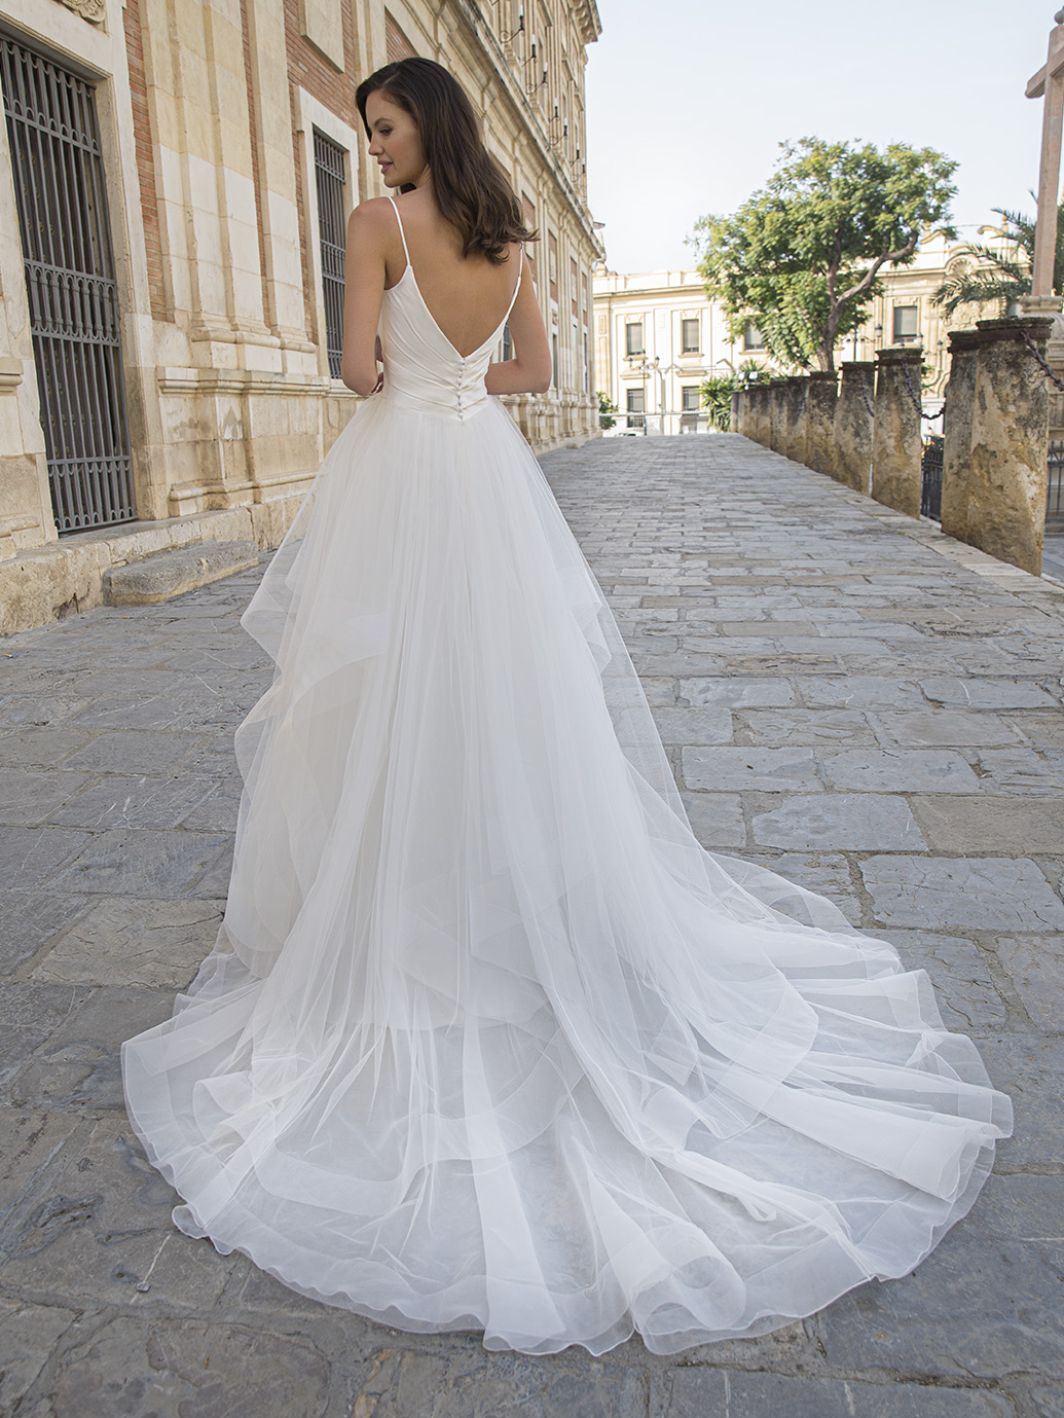 Quincy wedding dress by Elysee